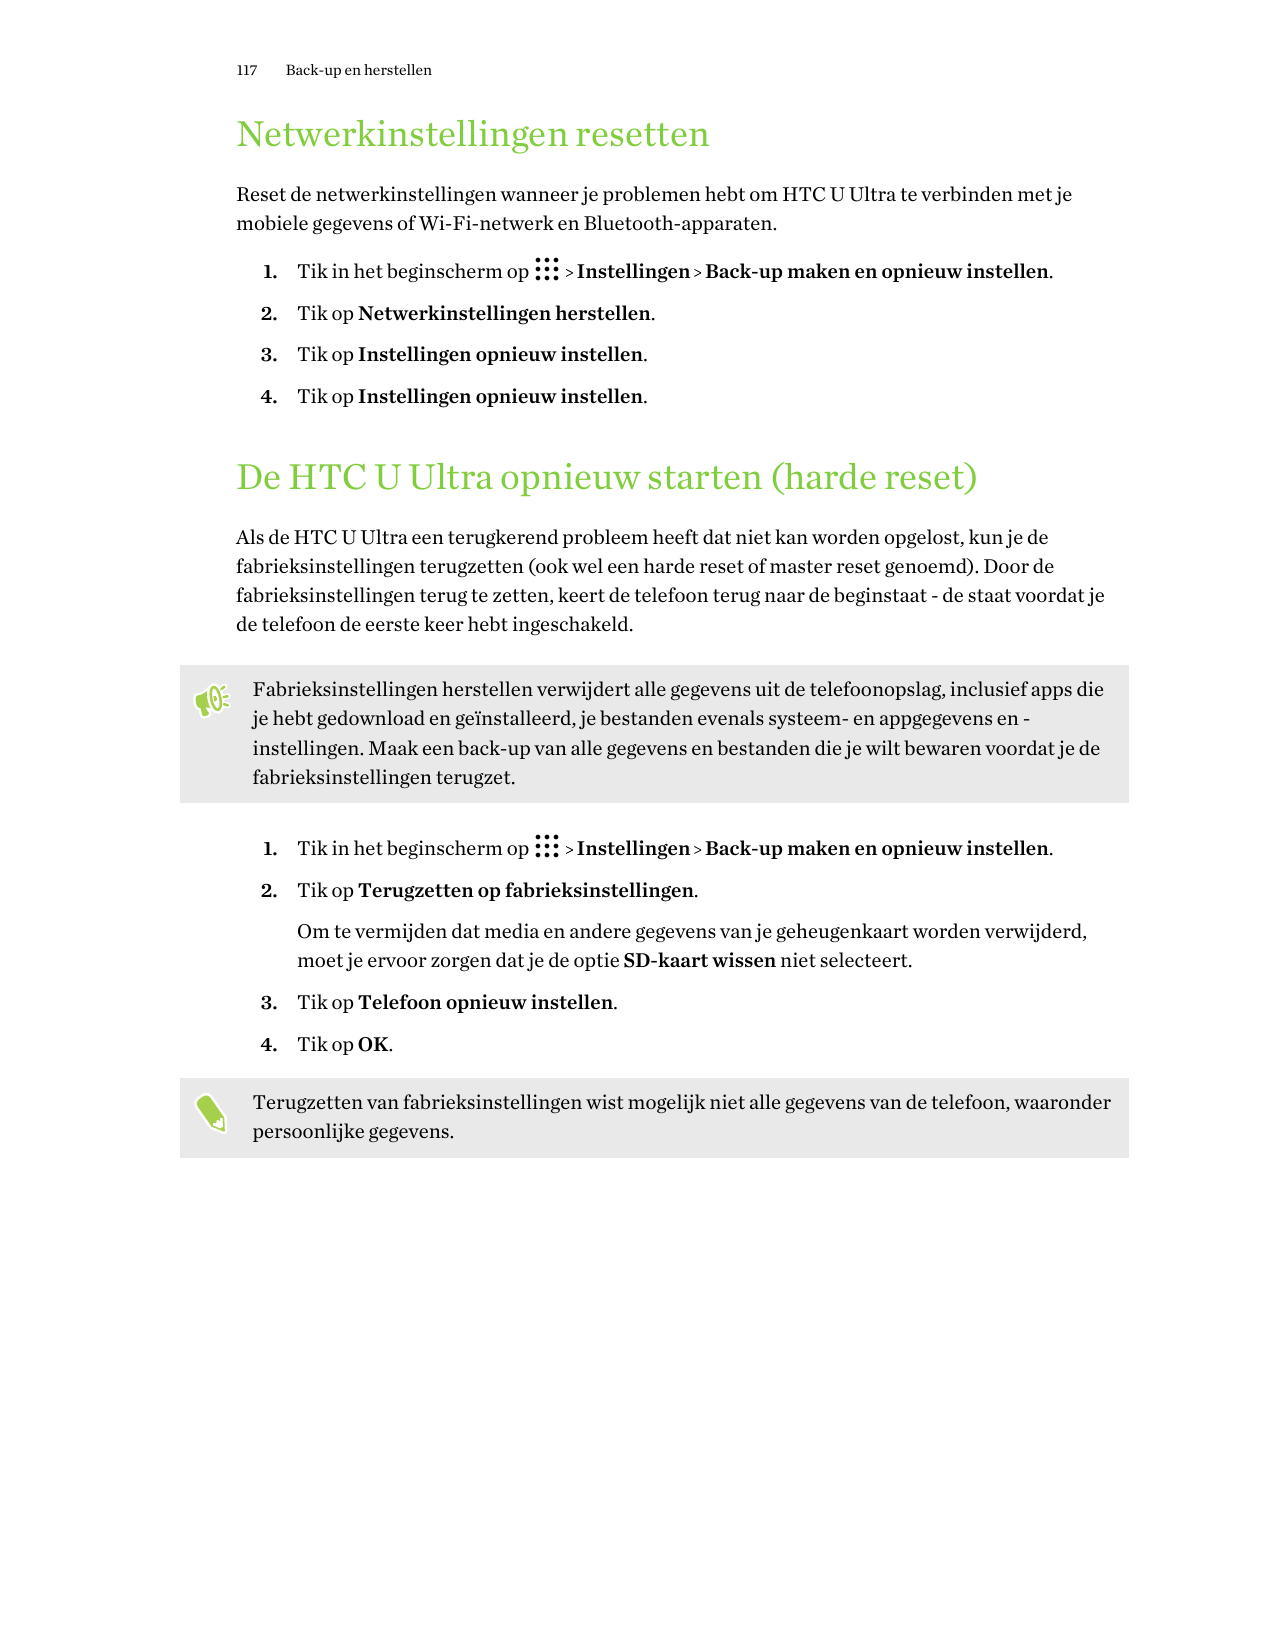 117Back-up en herstellenNetwerkinstellingen resettenReset de netwerkinstellingen wanneer je problemen hebt om HTC U Ultra te ver